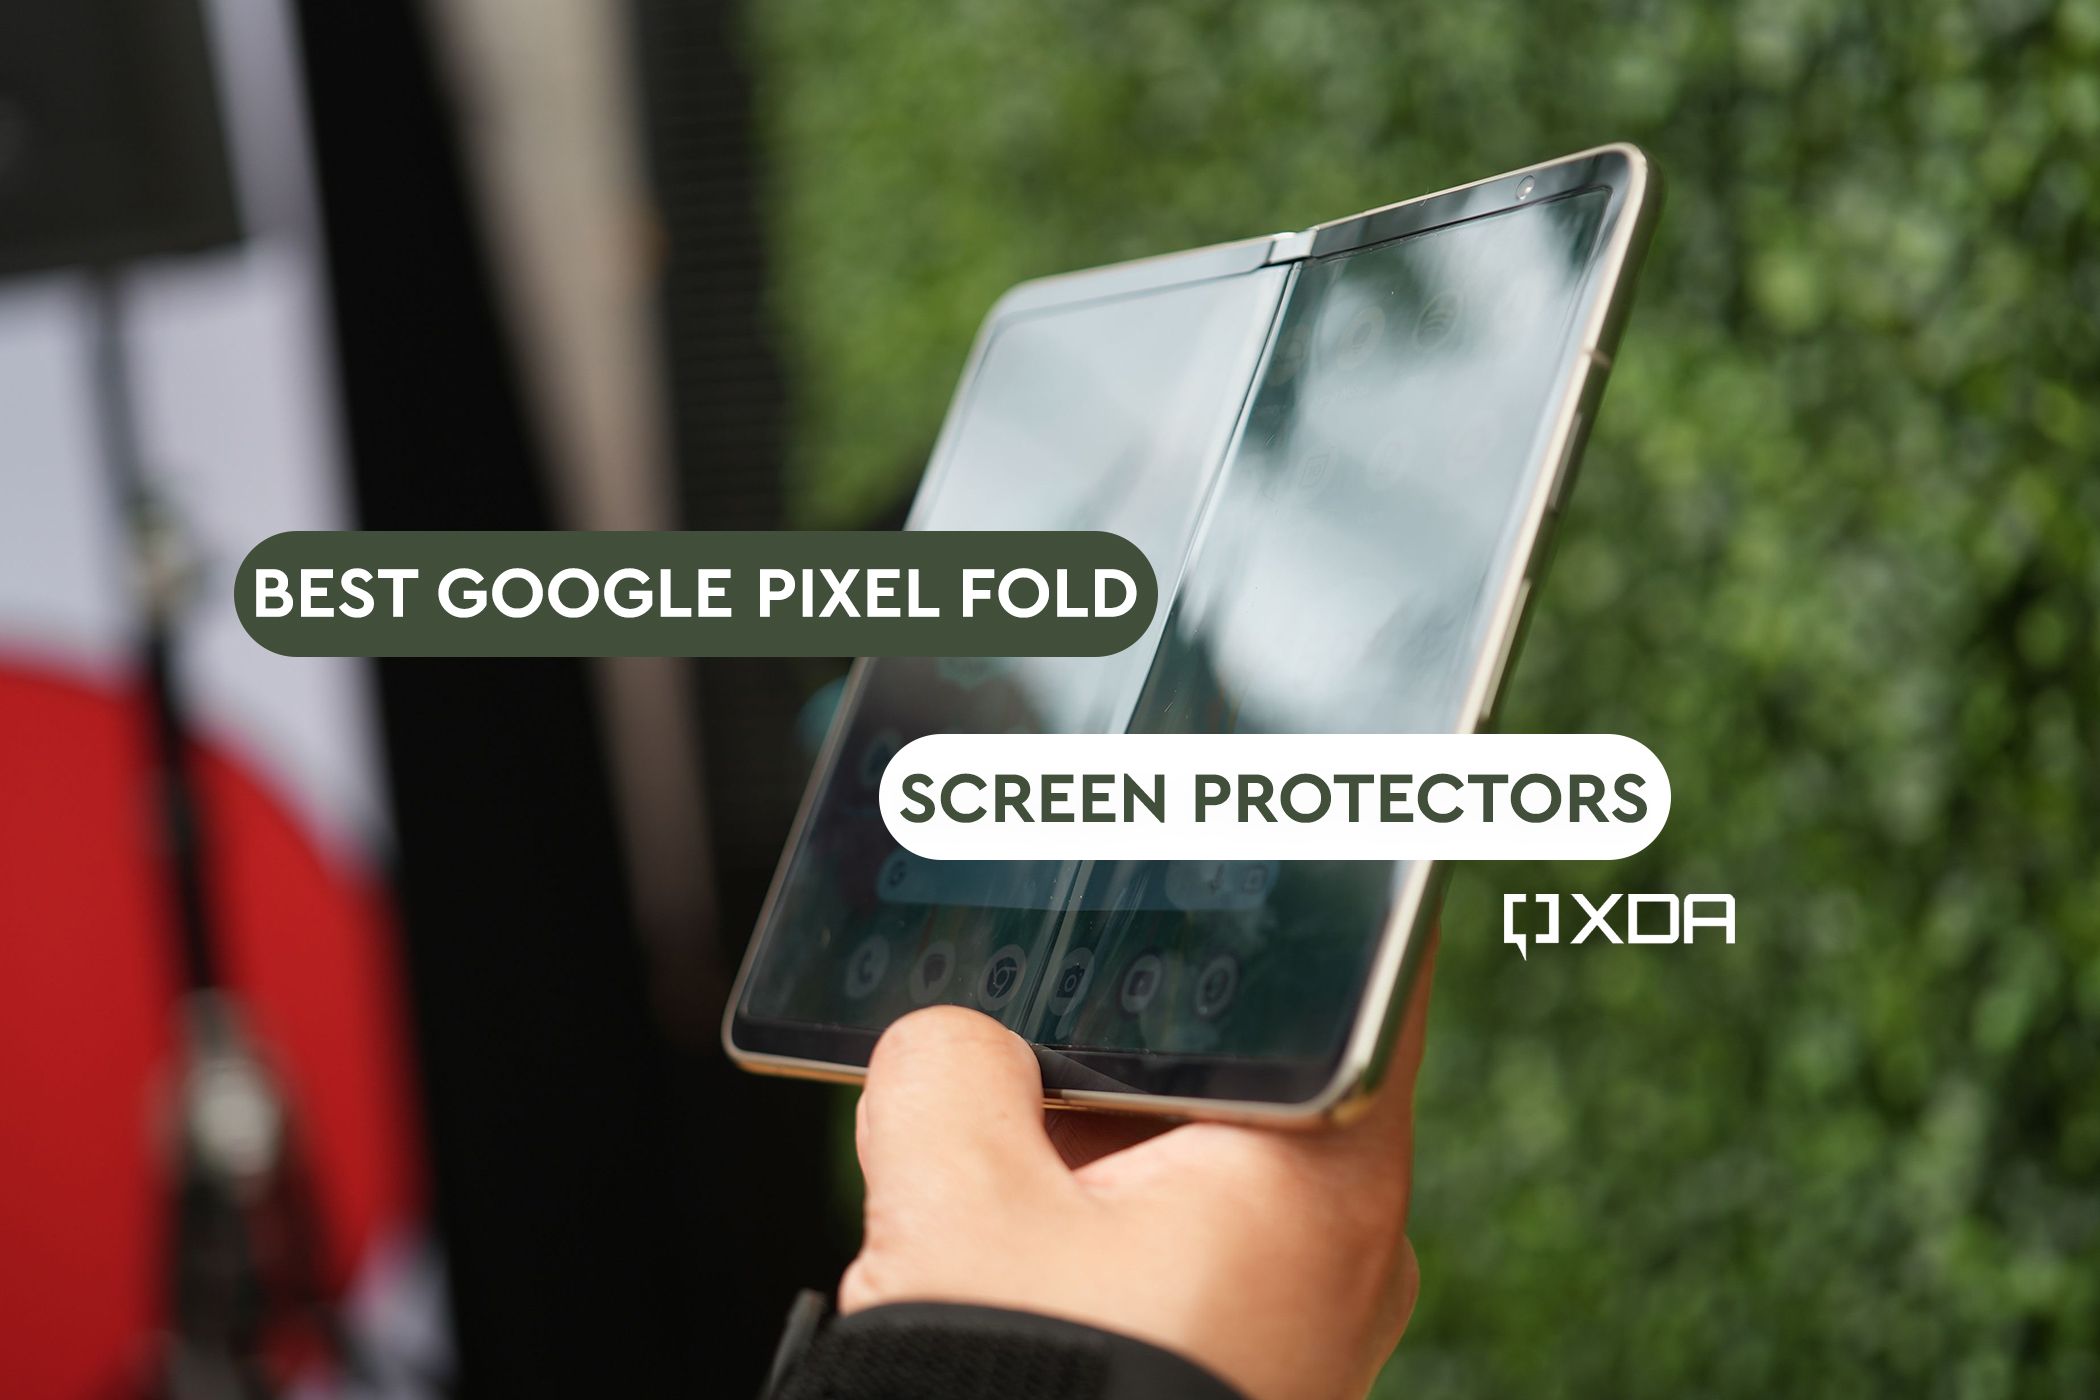 Best Google Pixel Fold screen protectors featured.